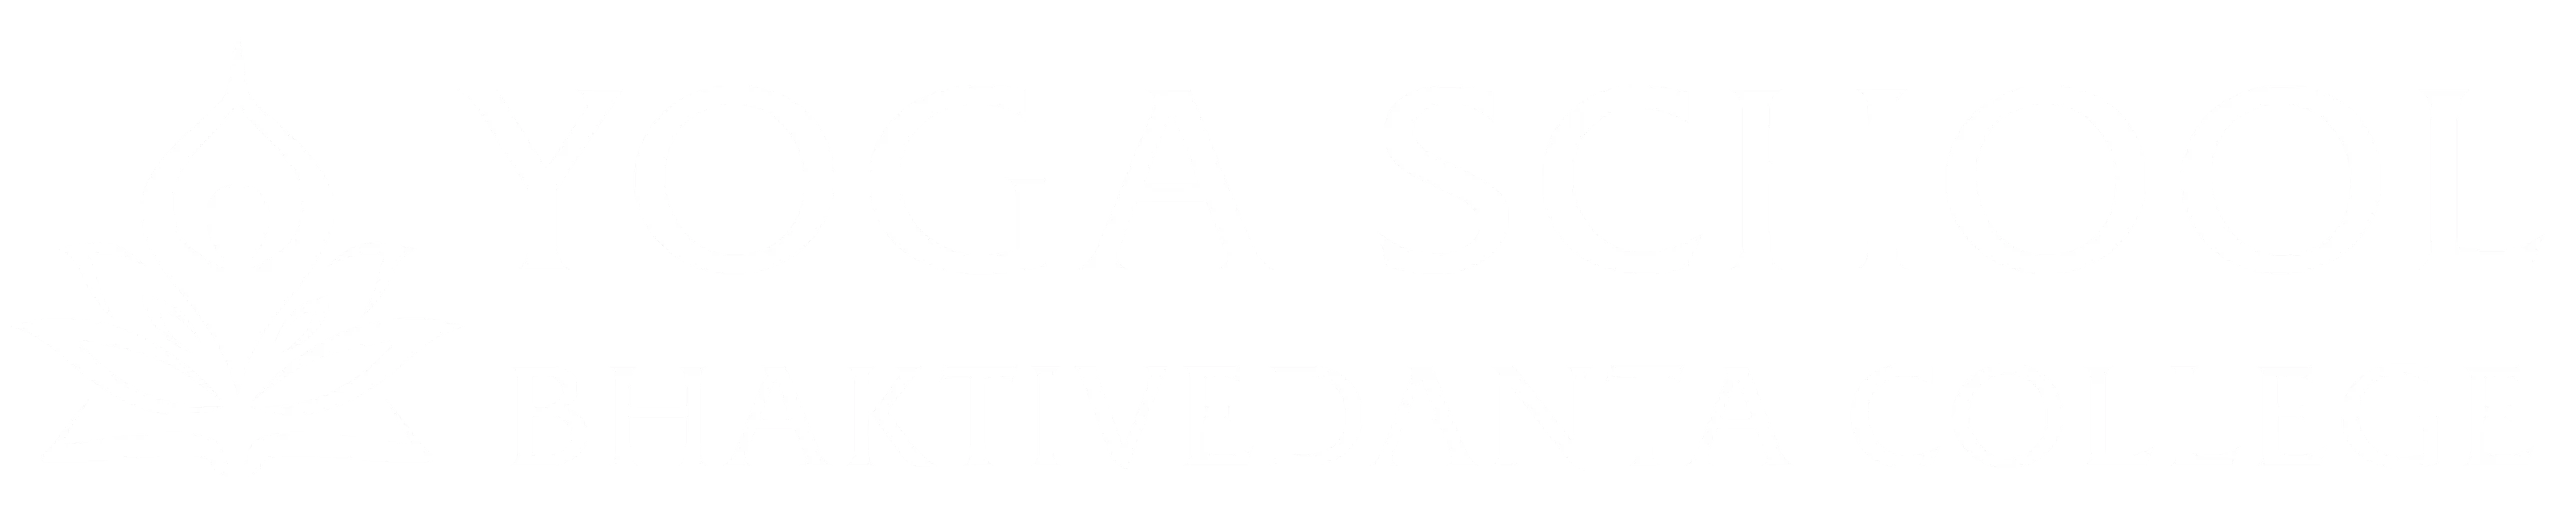 Bhaktivedanta yoga logo